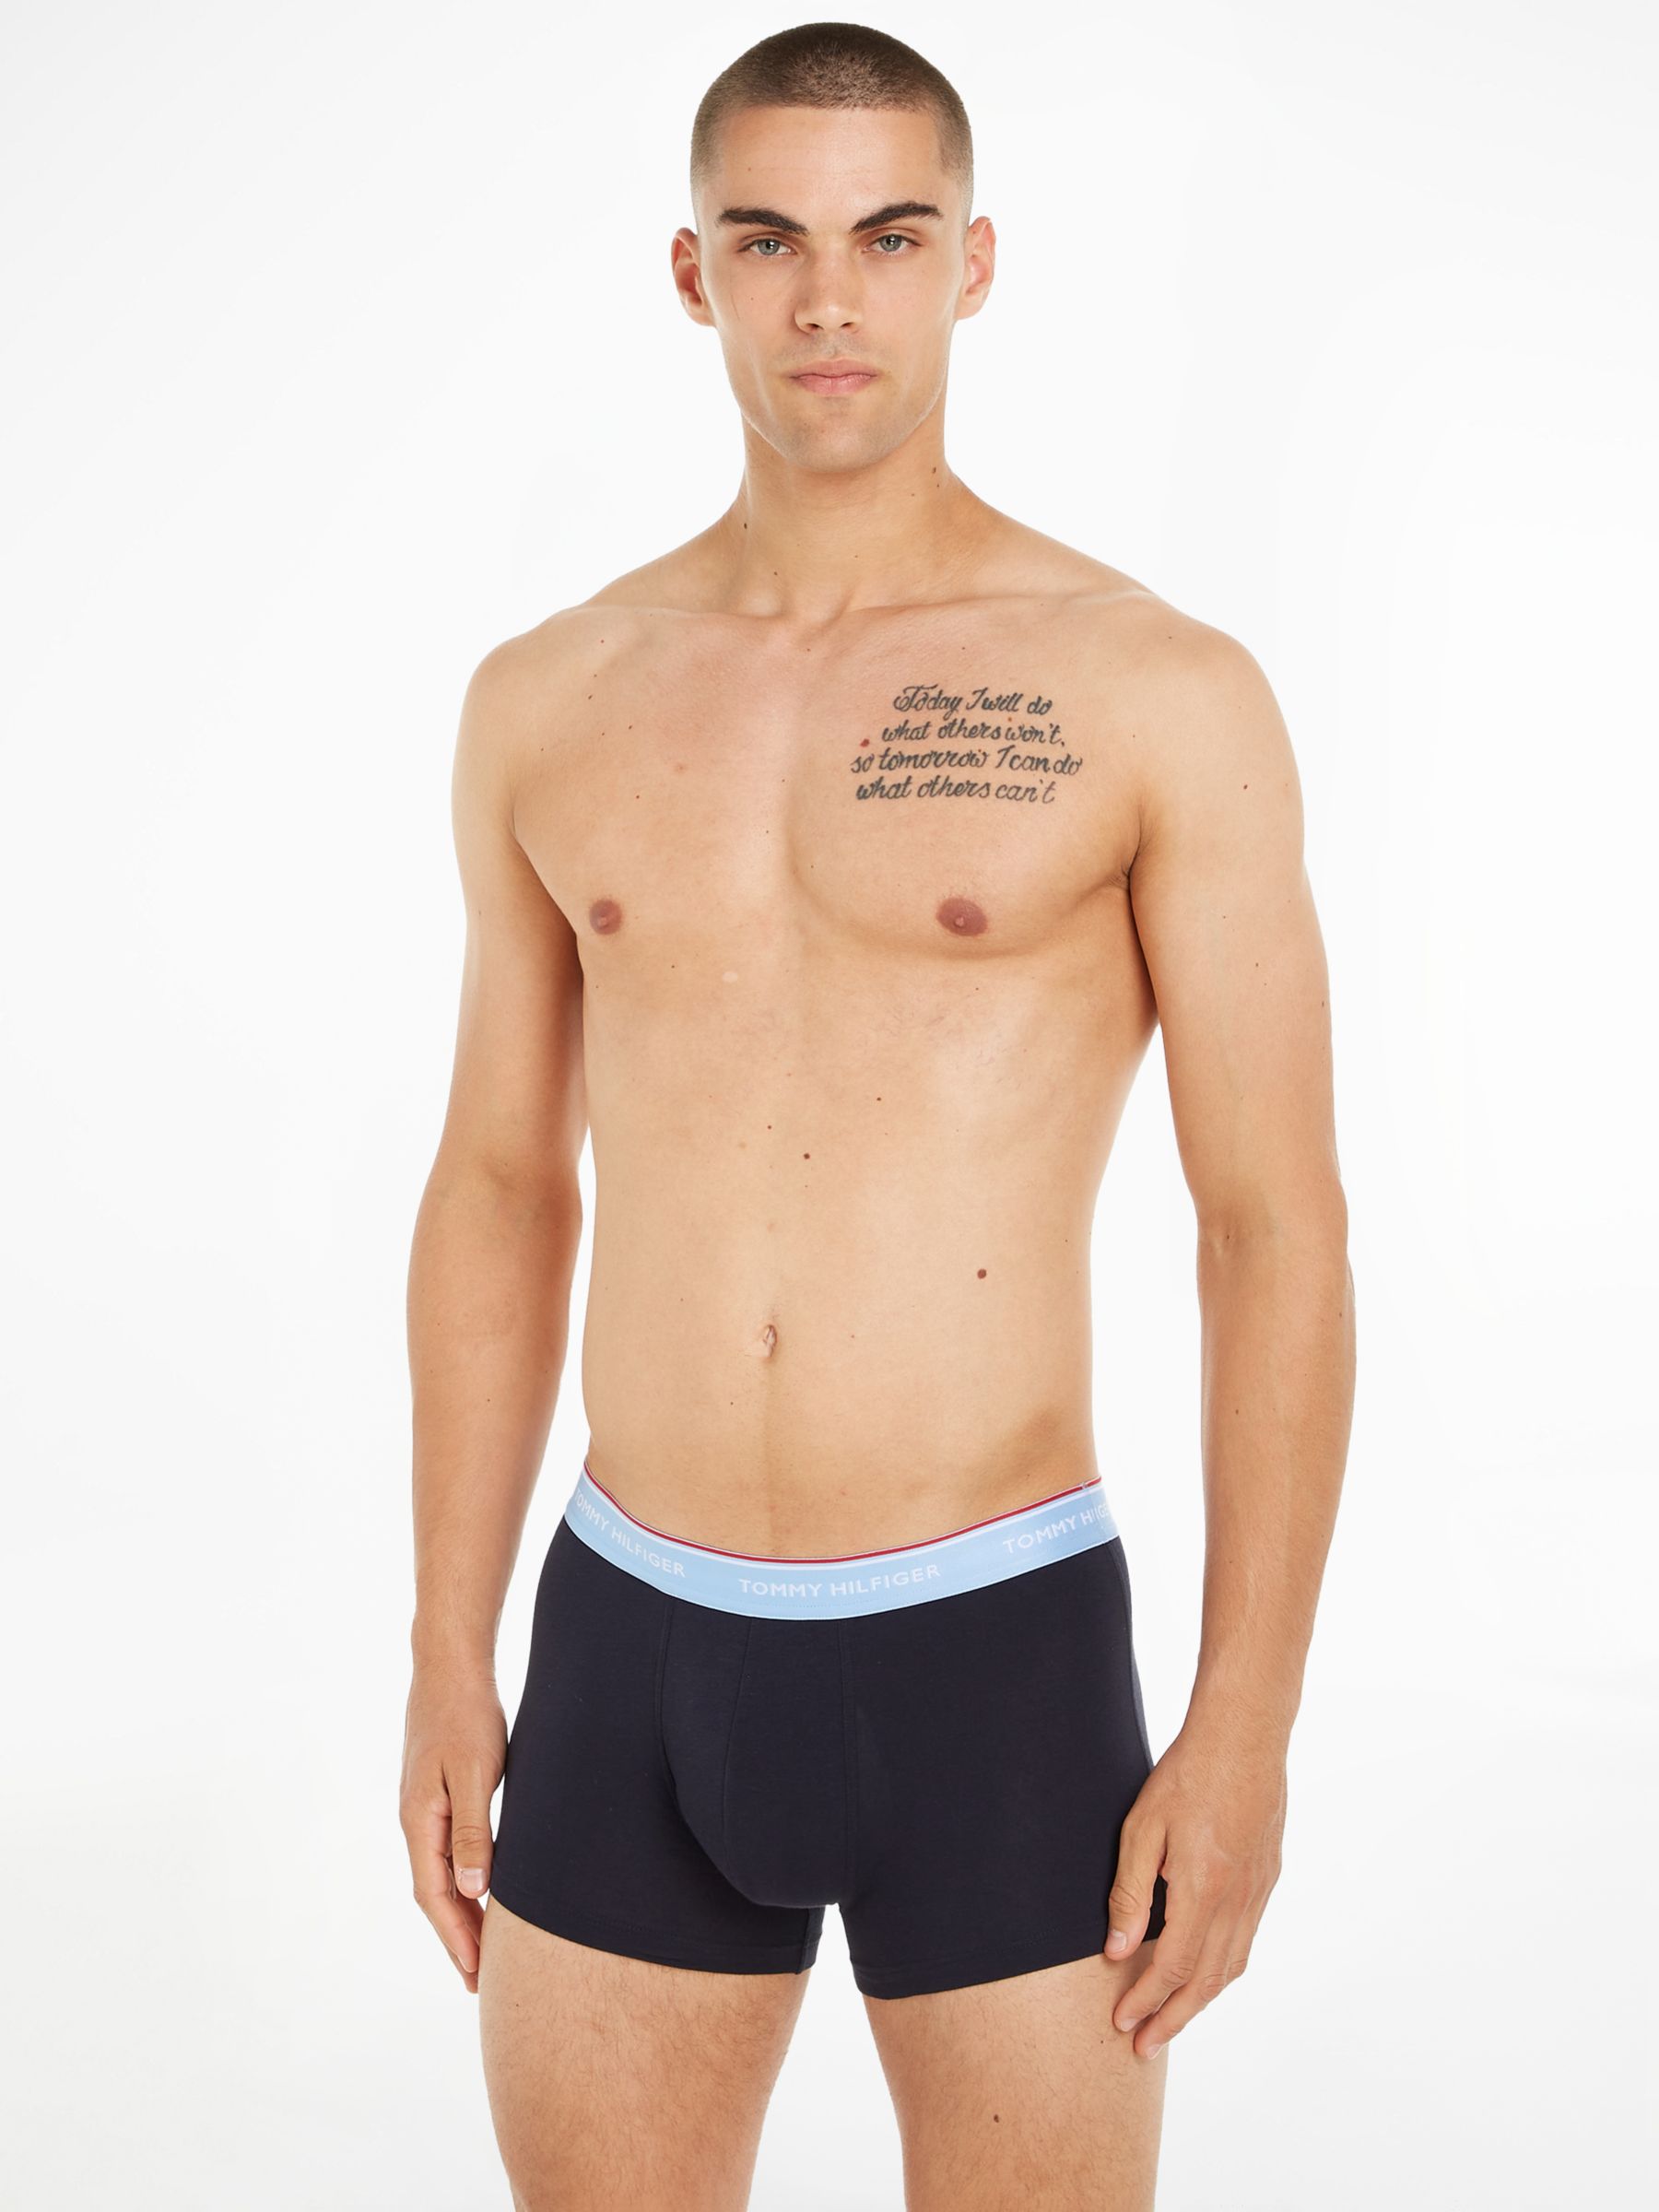 Tommy John Underwear for Men, Online Sale up to 40% off